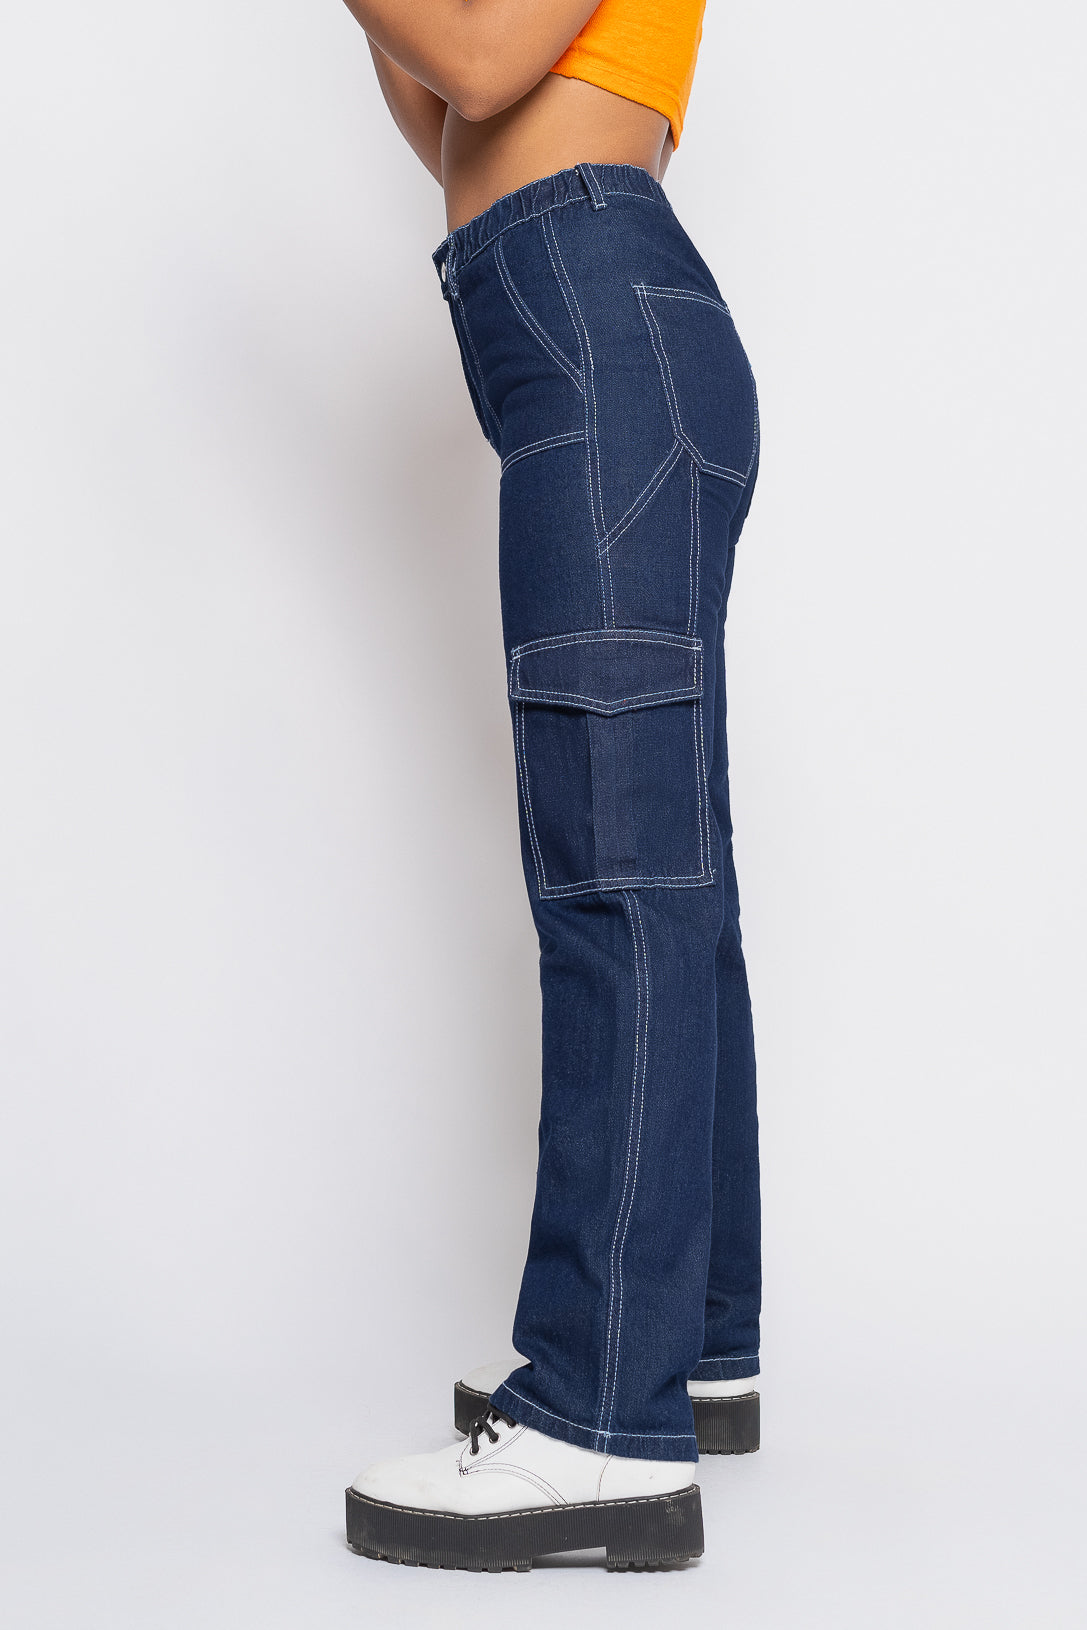 Gillian Curve Friendly Hourglass Jeans